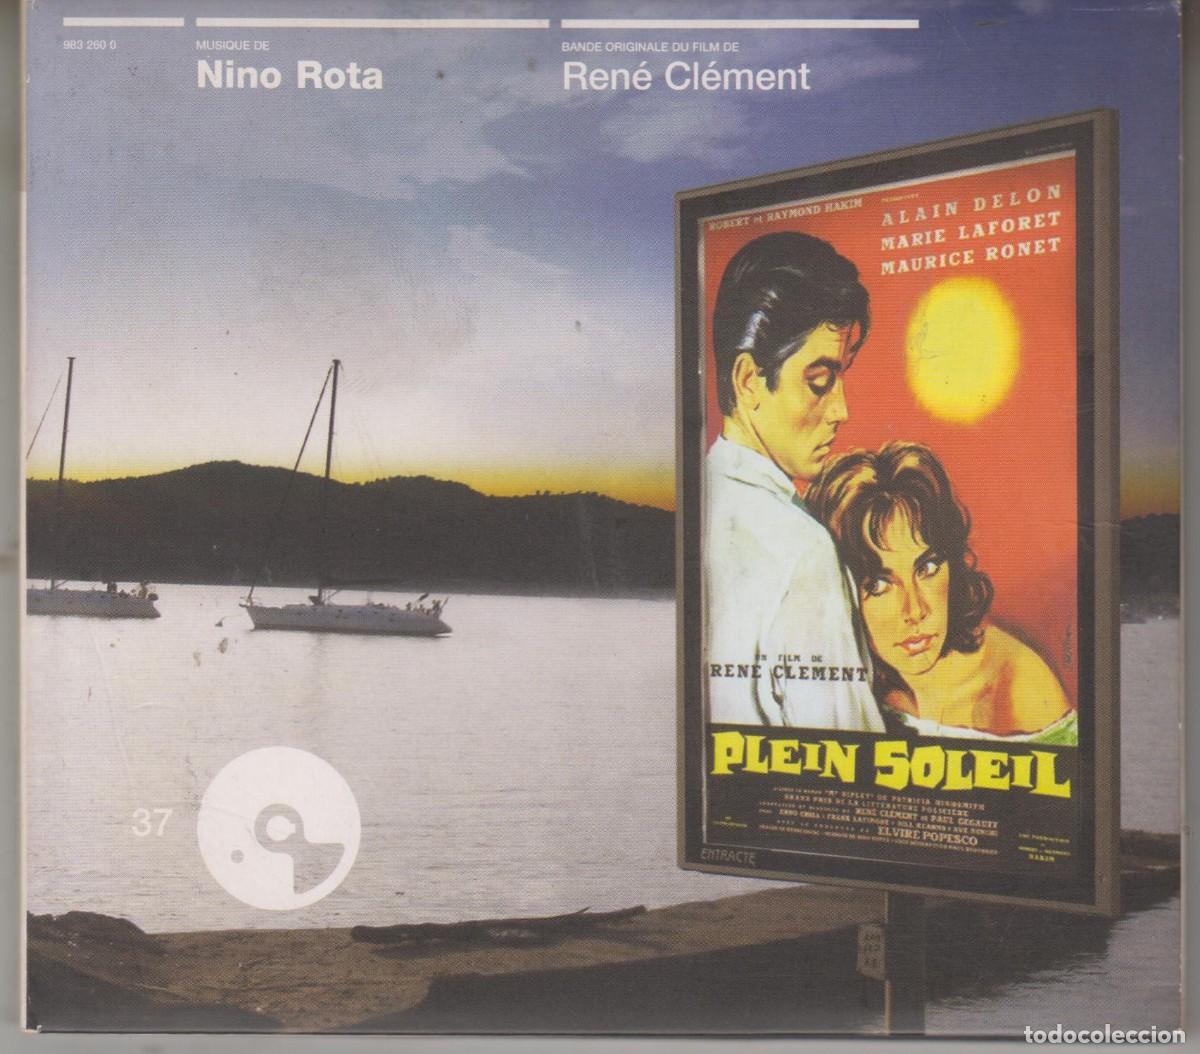 Plein Soleil (Bande Originale de Film) - Album by Nino Rota